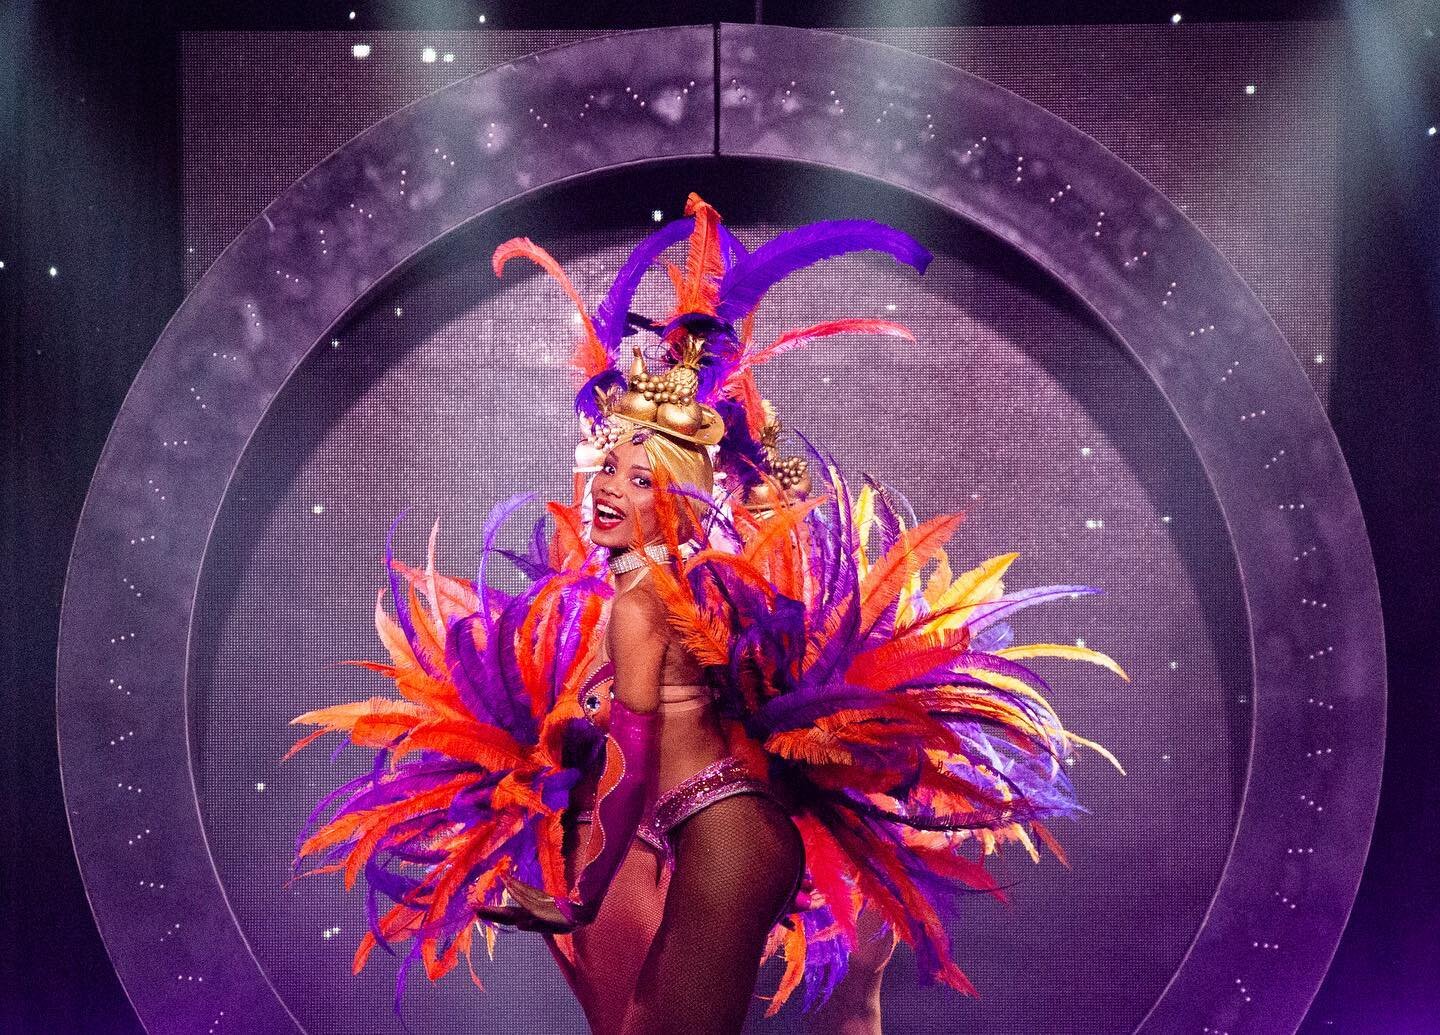 @kriokshow at @moustachecabaret 

📸 @l.crp_photographie 

#samba #showbresilien #brazilianshow #danseuse #dan&ccedil;arina #dancer #plume #brasil #show #cabaret #dance #sambabresienne #costumes #girl #sambadan&ccedil;a #cabaretshow #cabaretmoustache